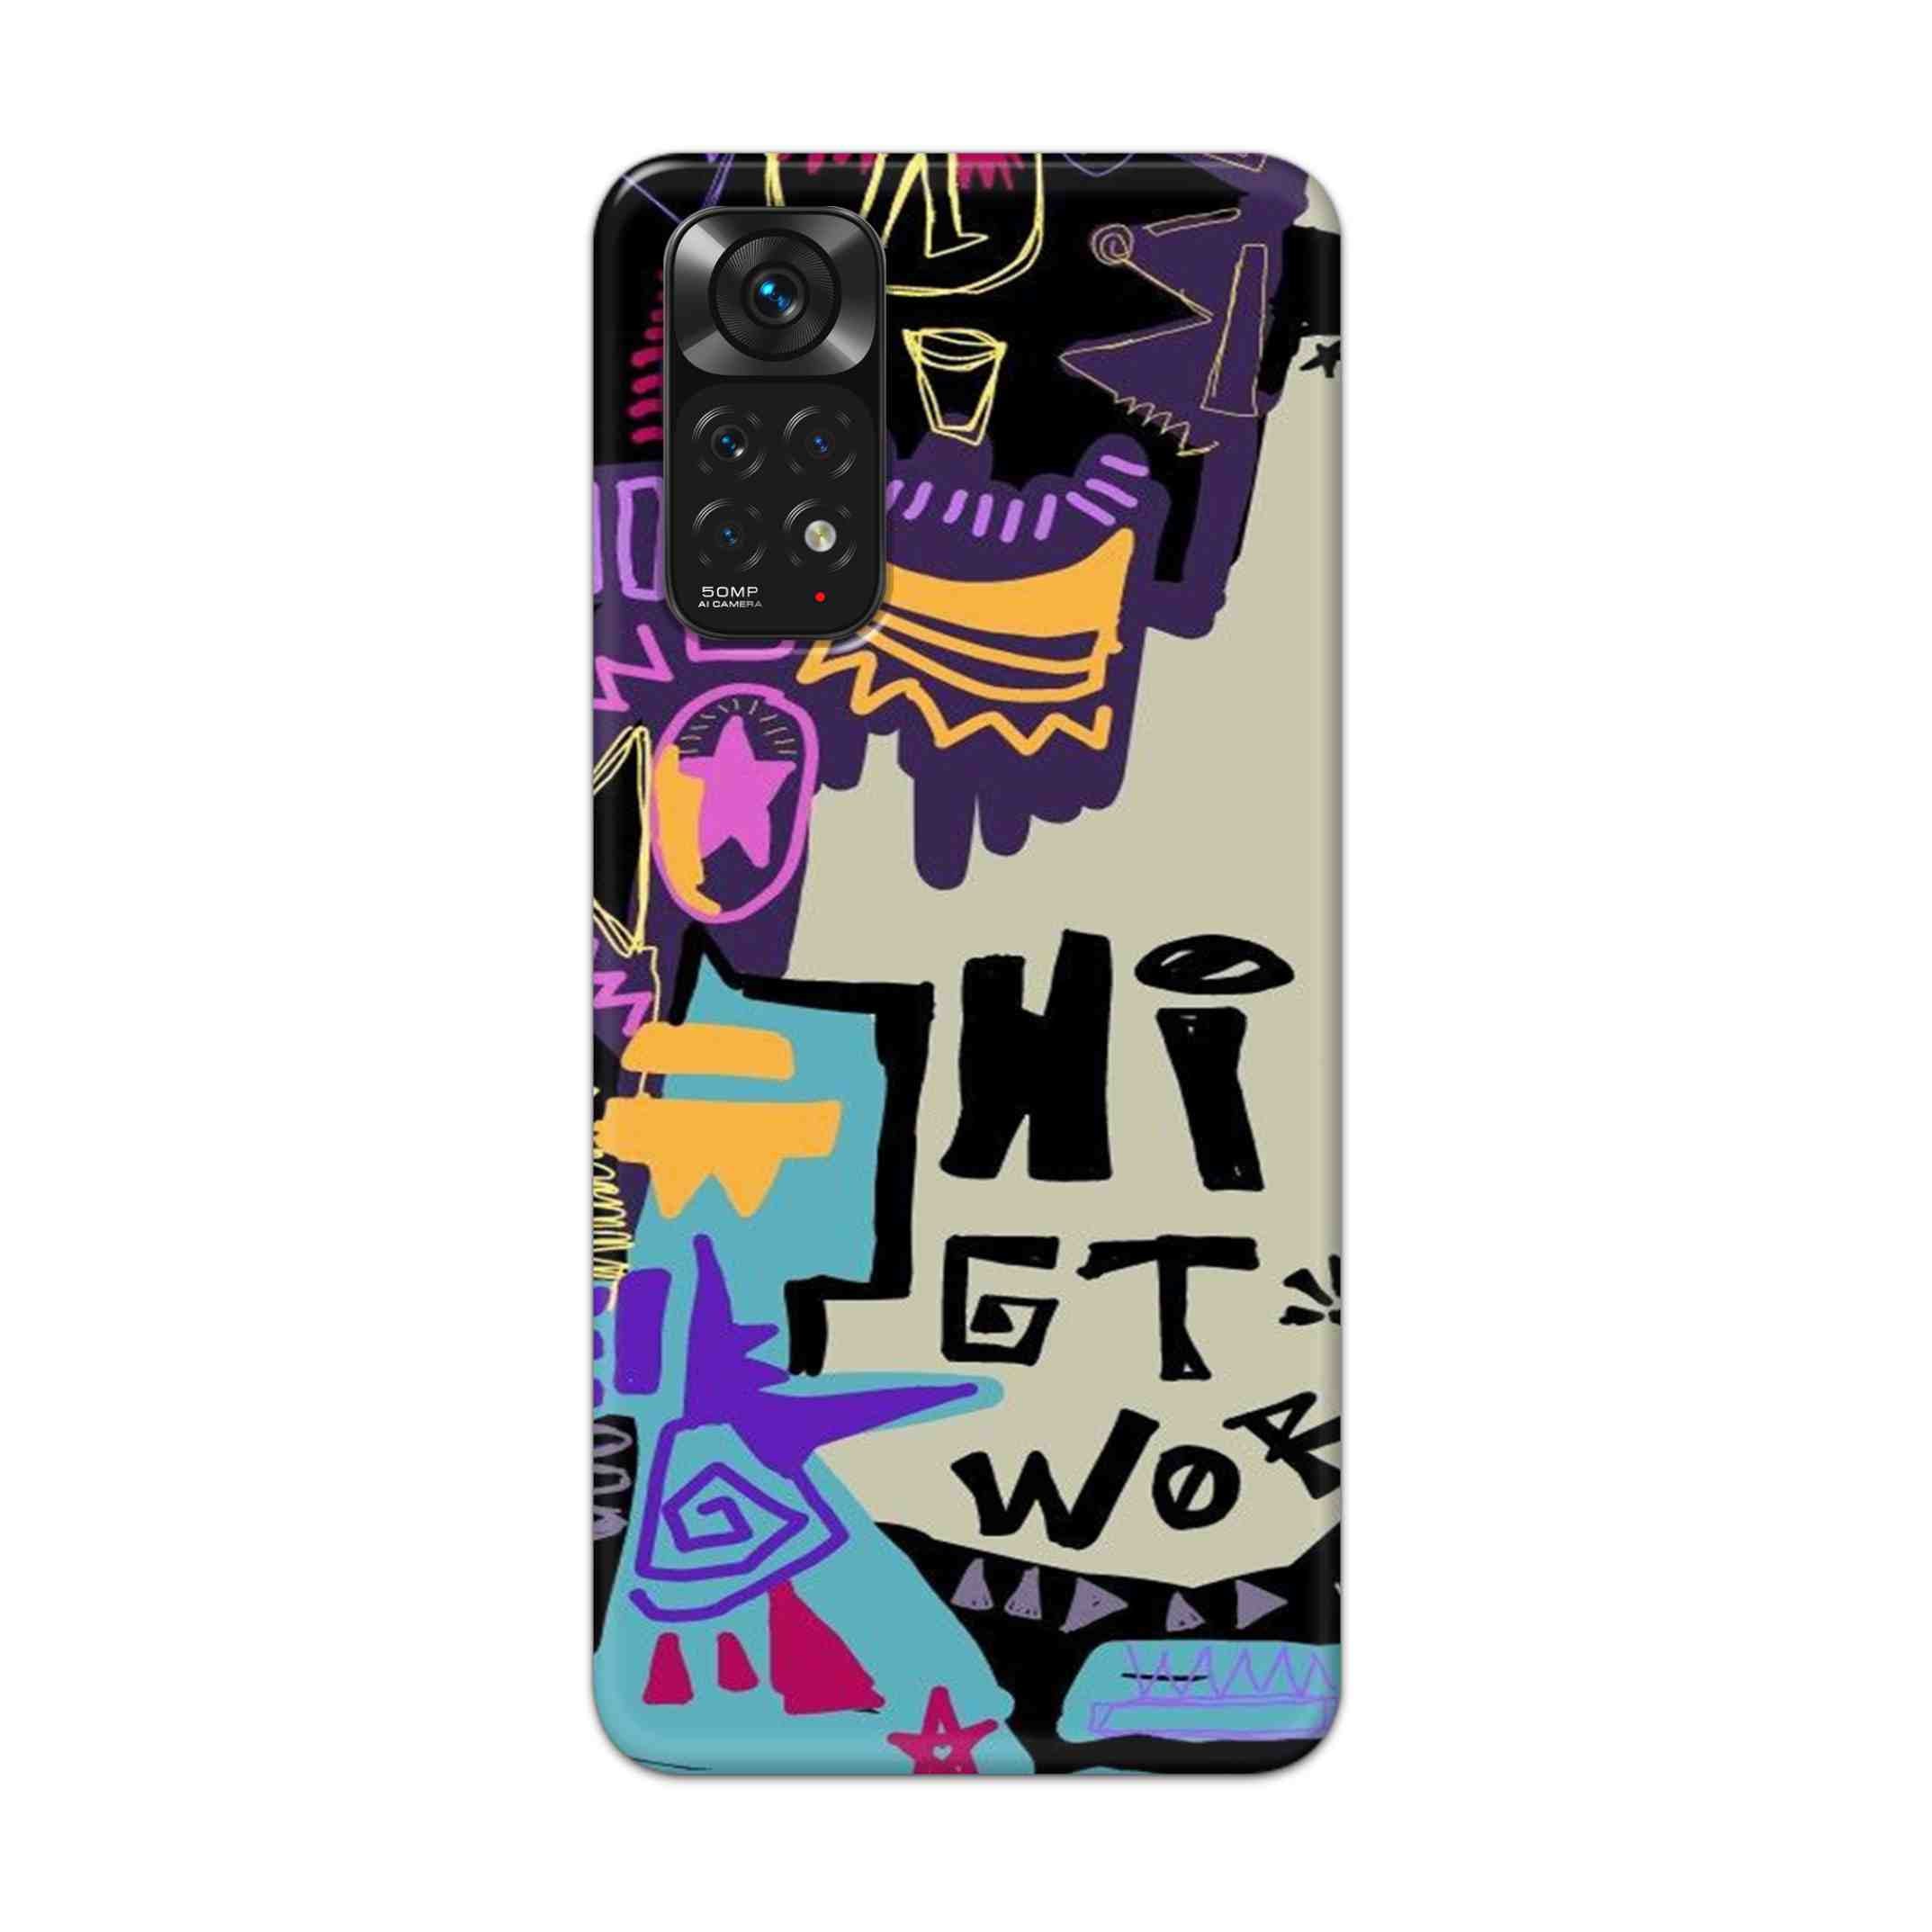 Buy Hi Gt World Hard Back Mobile Phone Case Cover For Redmi Note 11 Online